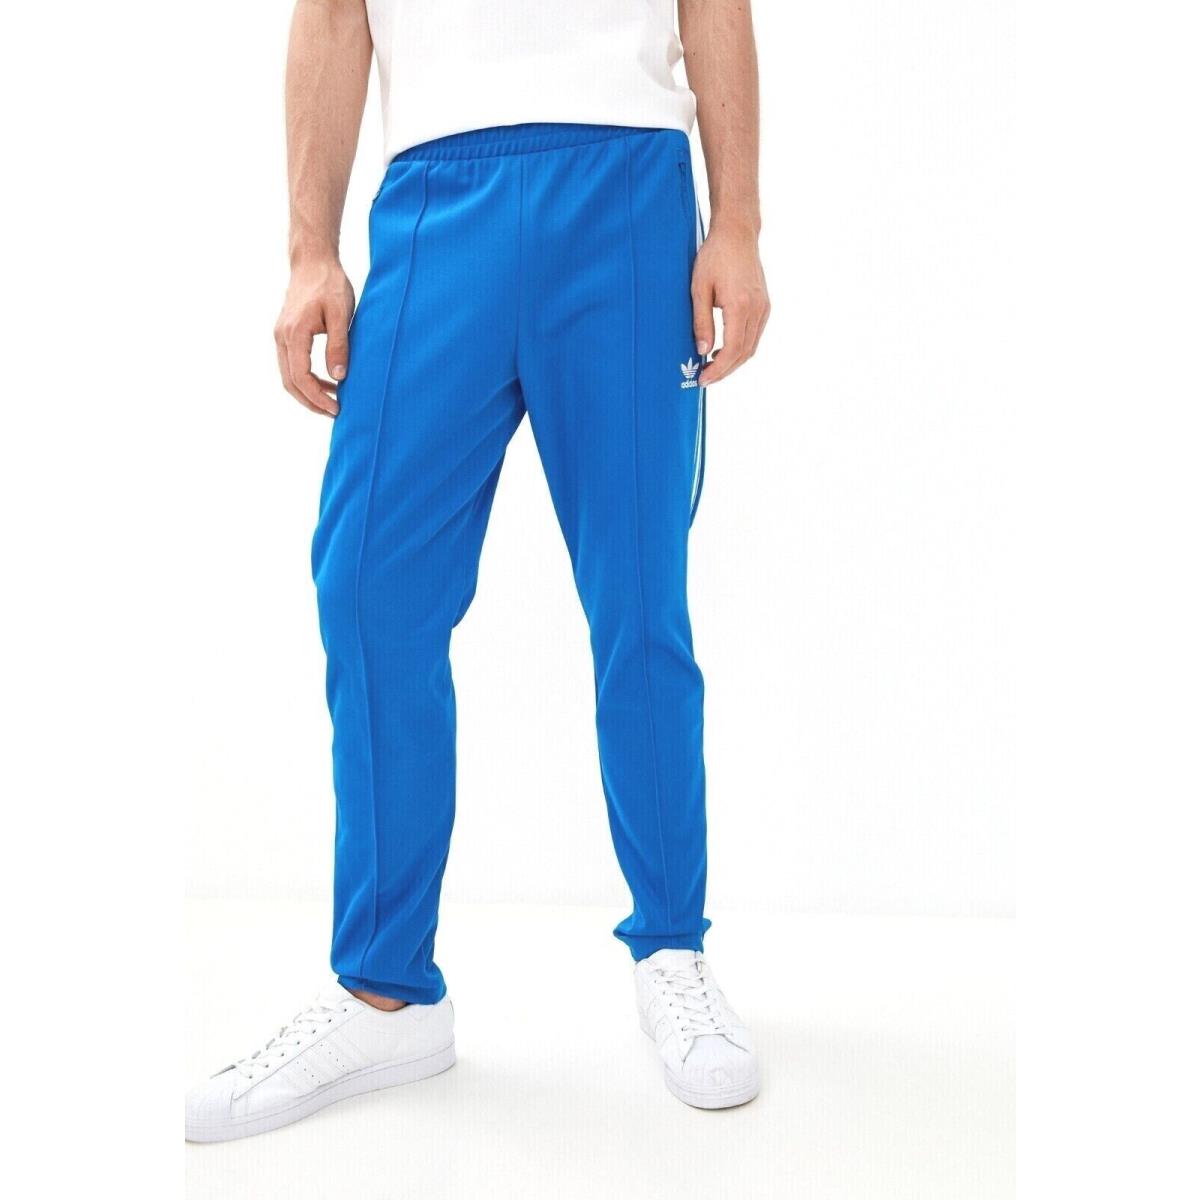 Adidas Originals Classic Beckenbauer Bluebird Track Pant H09116 Men Size Medium